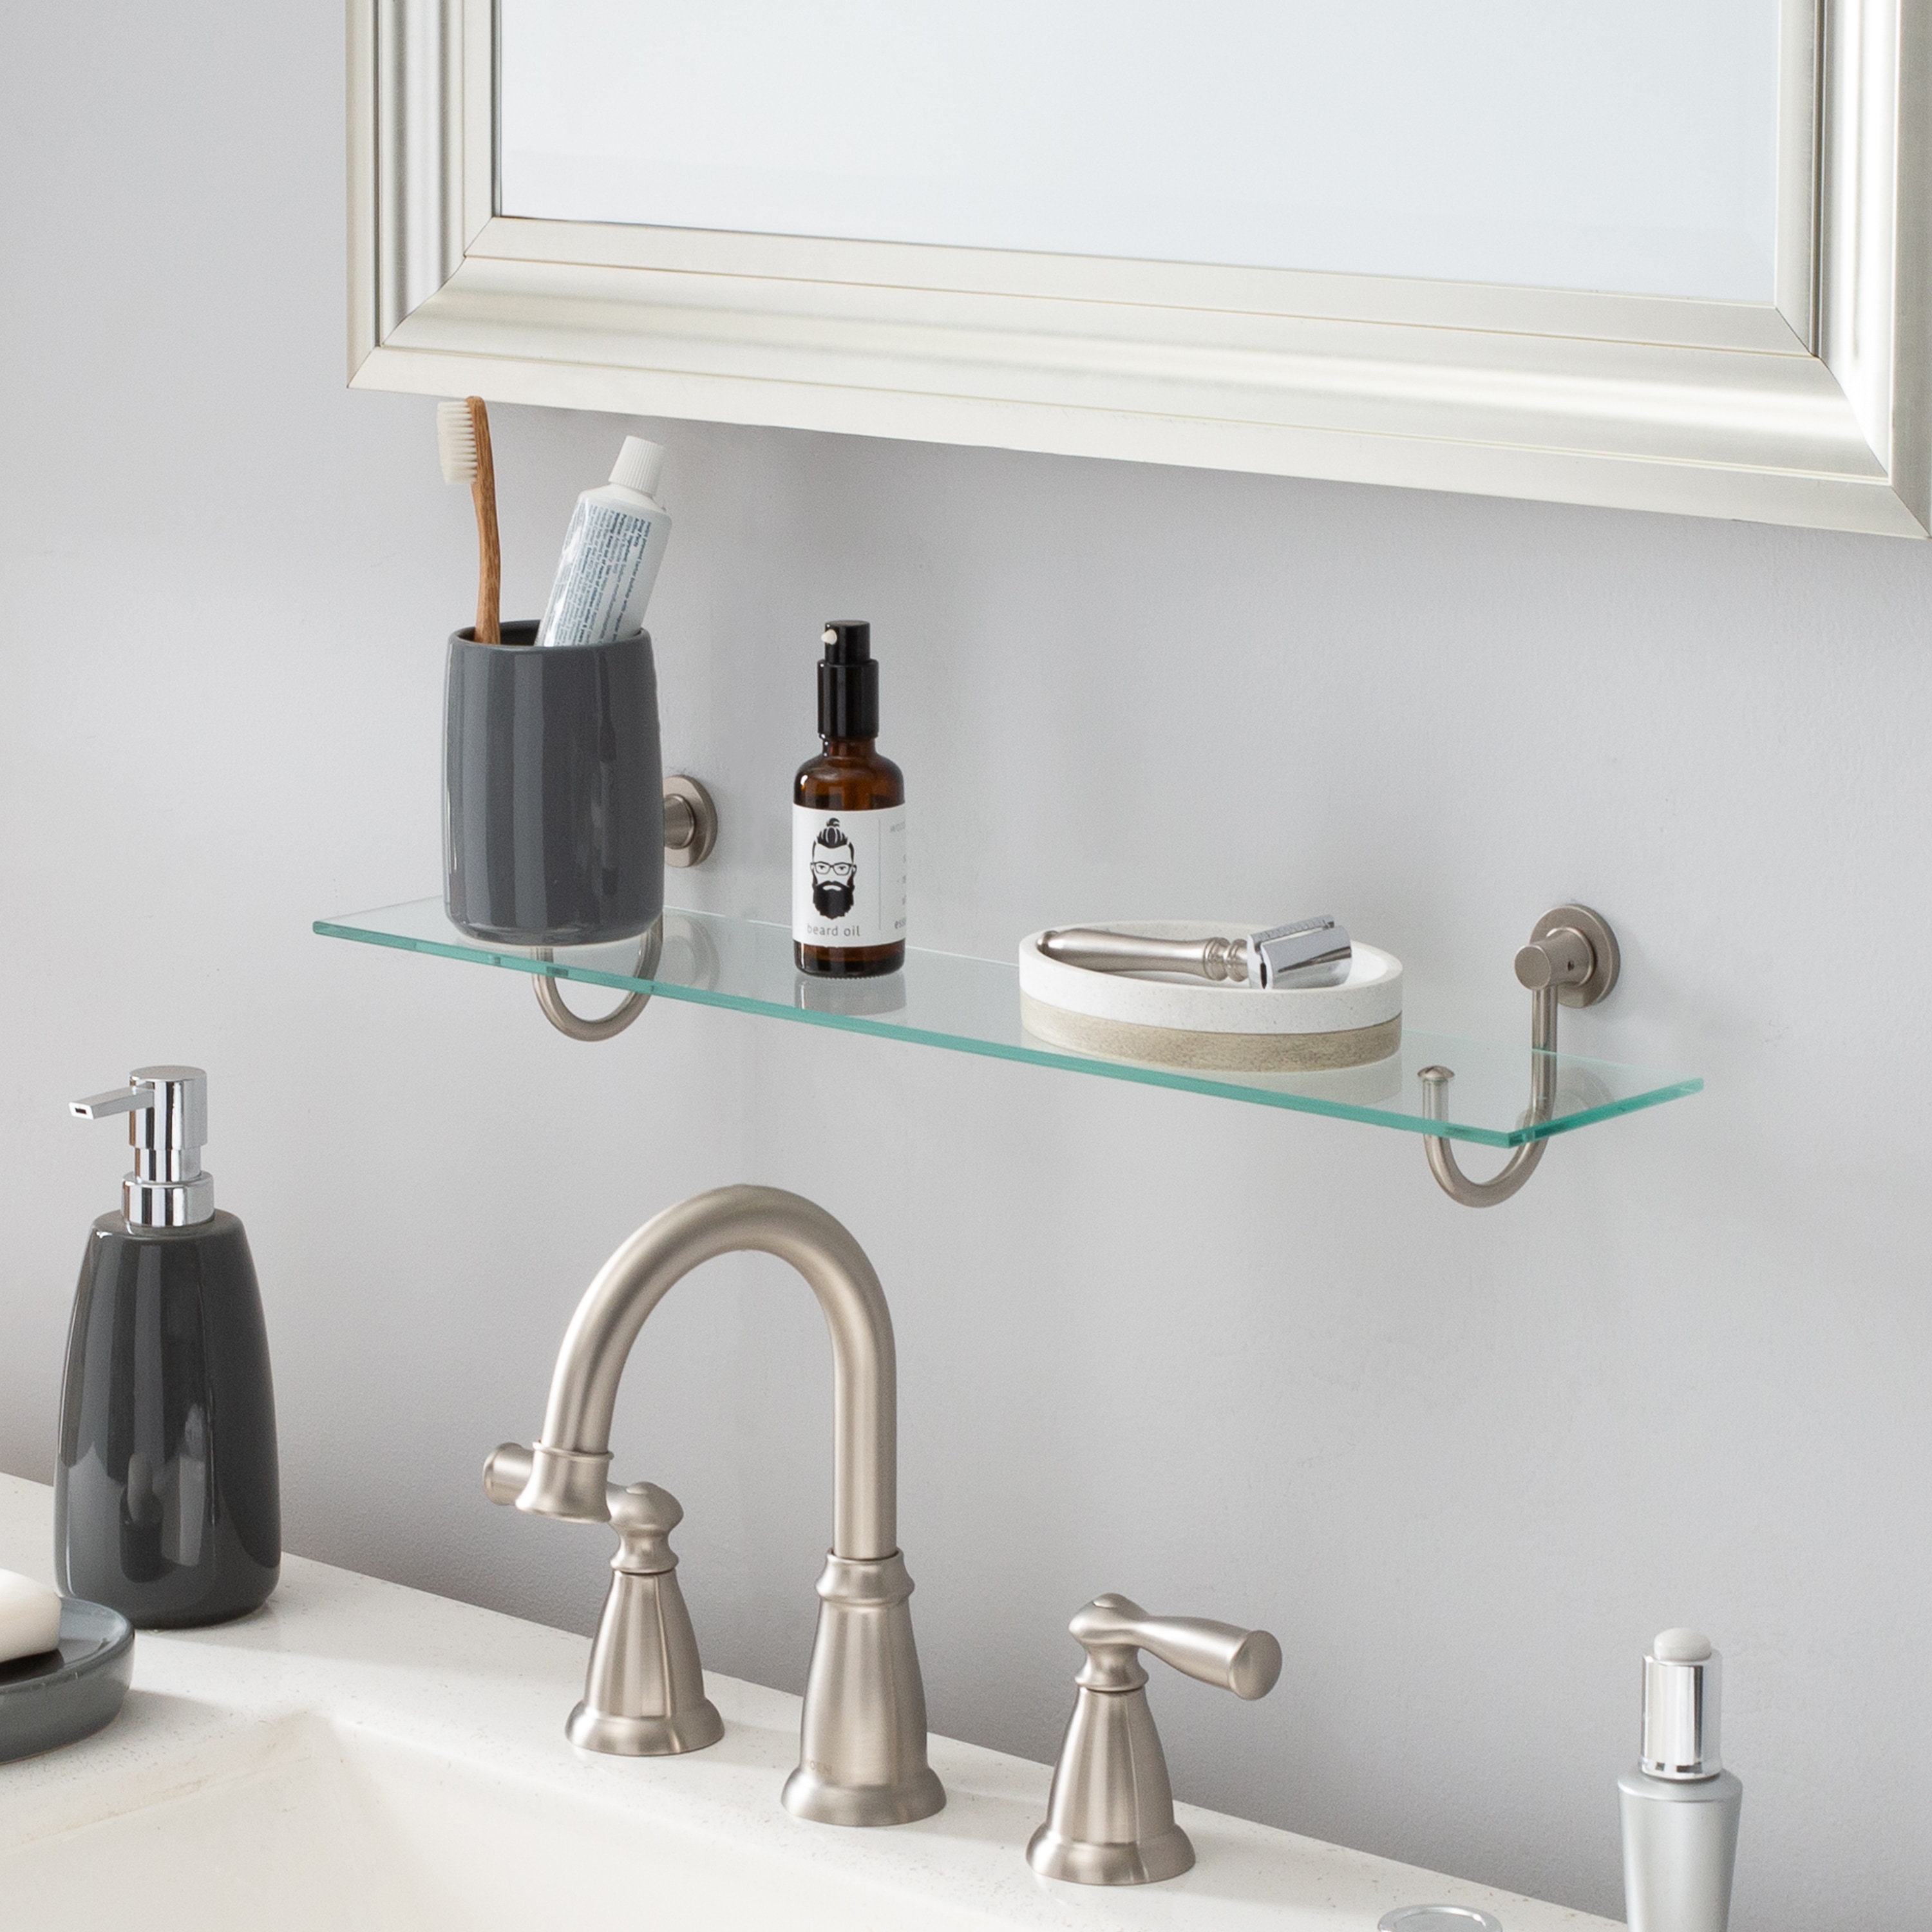 Glass and Brass Vintage Glass Shelf Over Sink - Transitional - Bathroom